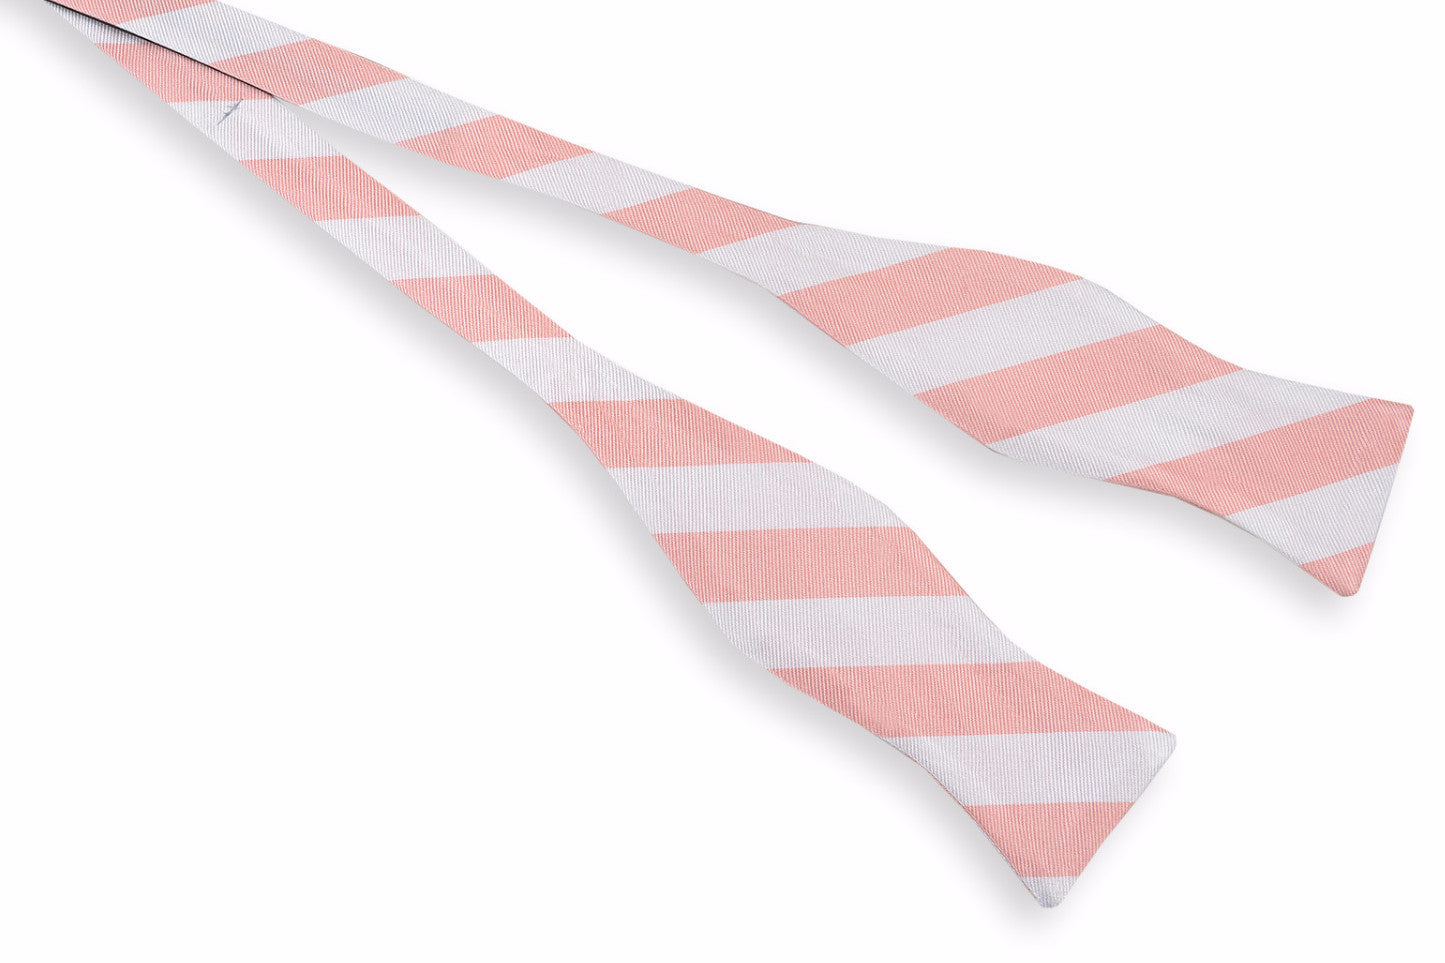 Men's silk bow tie featuring a peach and white striped design.